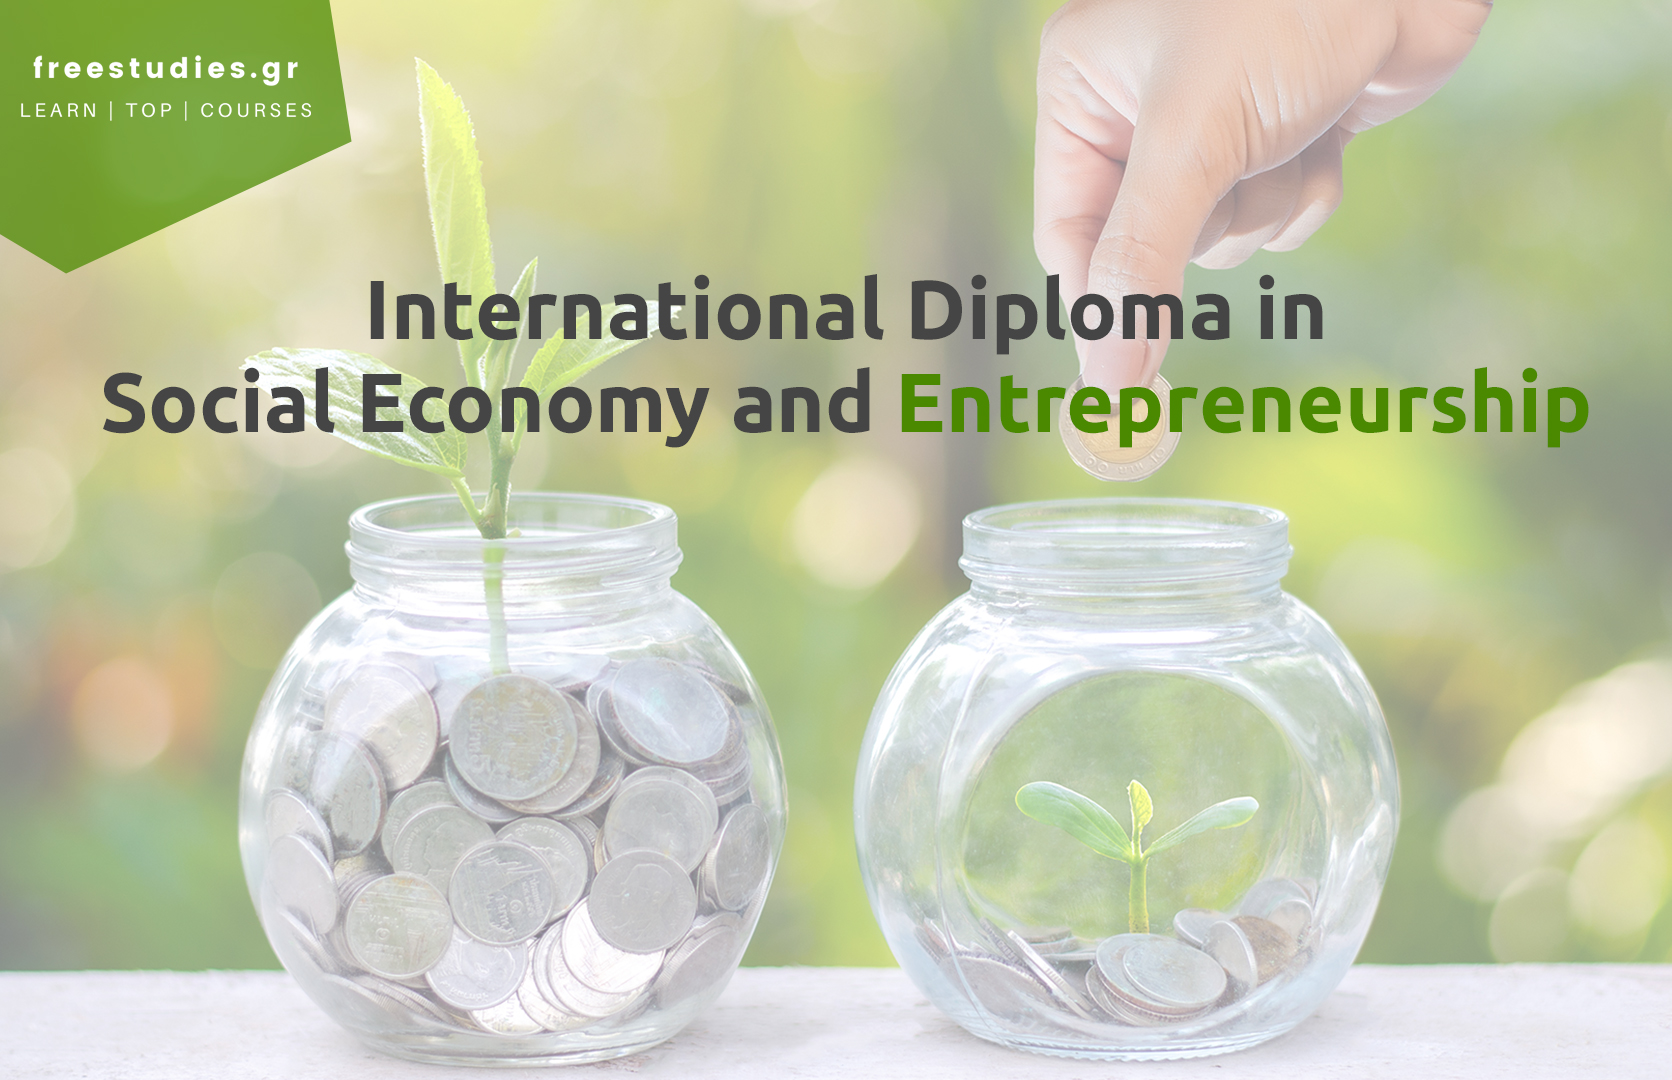 International Diploma in Social Economy and Entrepreneurship